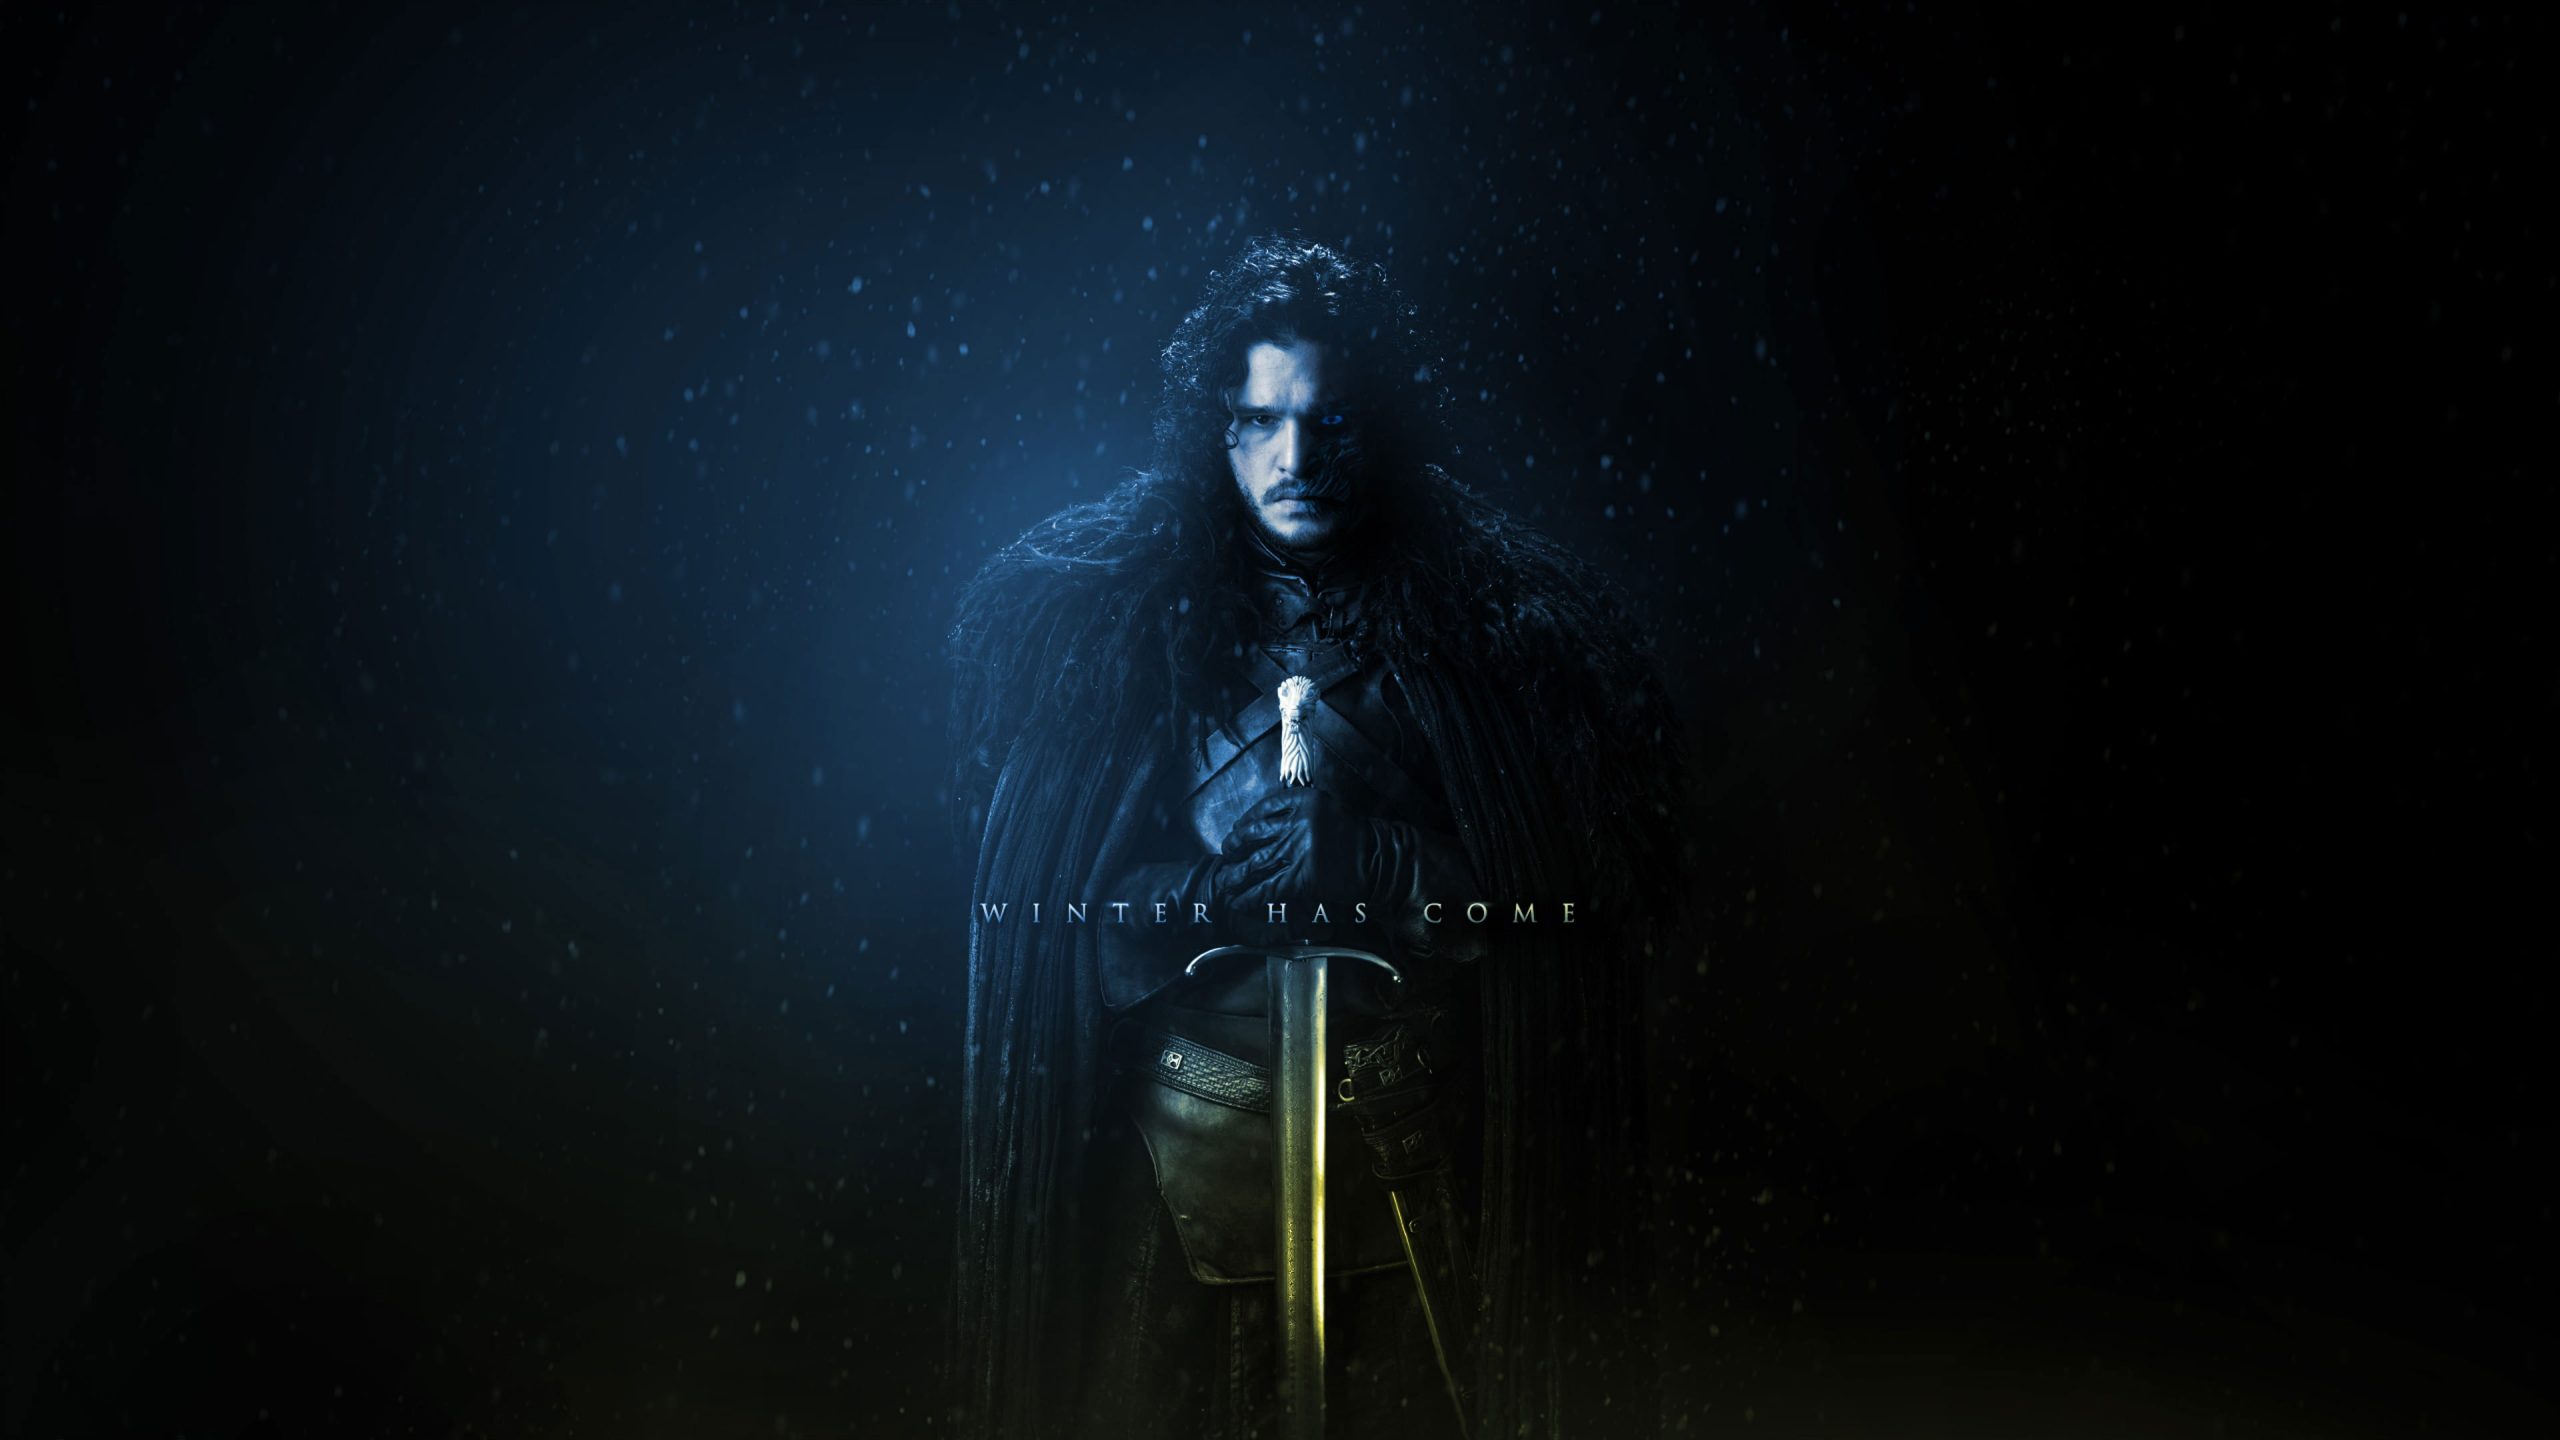 Game of Thrones John Snow wallpaper, Jon Snow, digital art, fantasy art